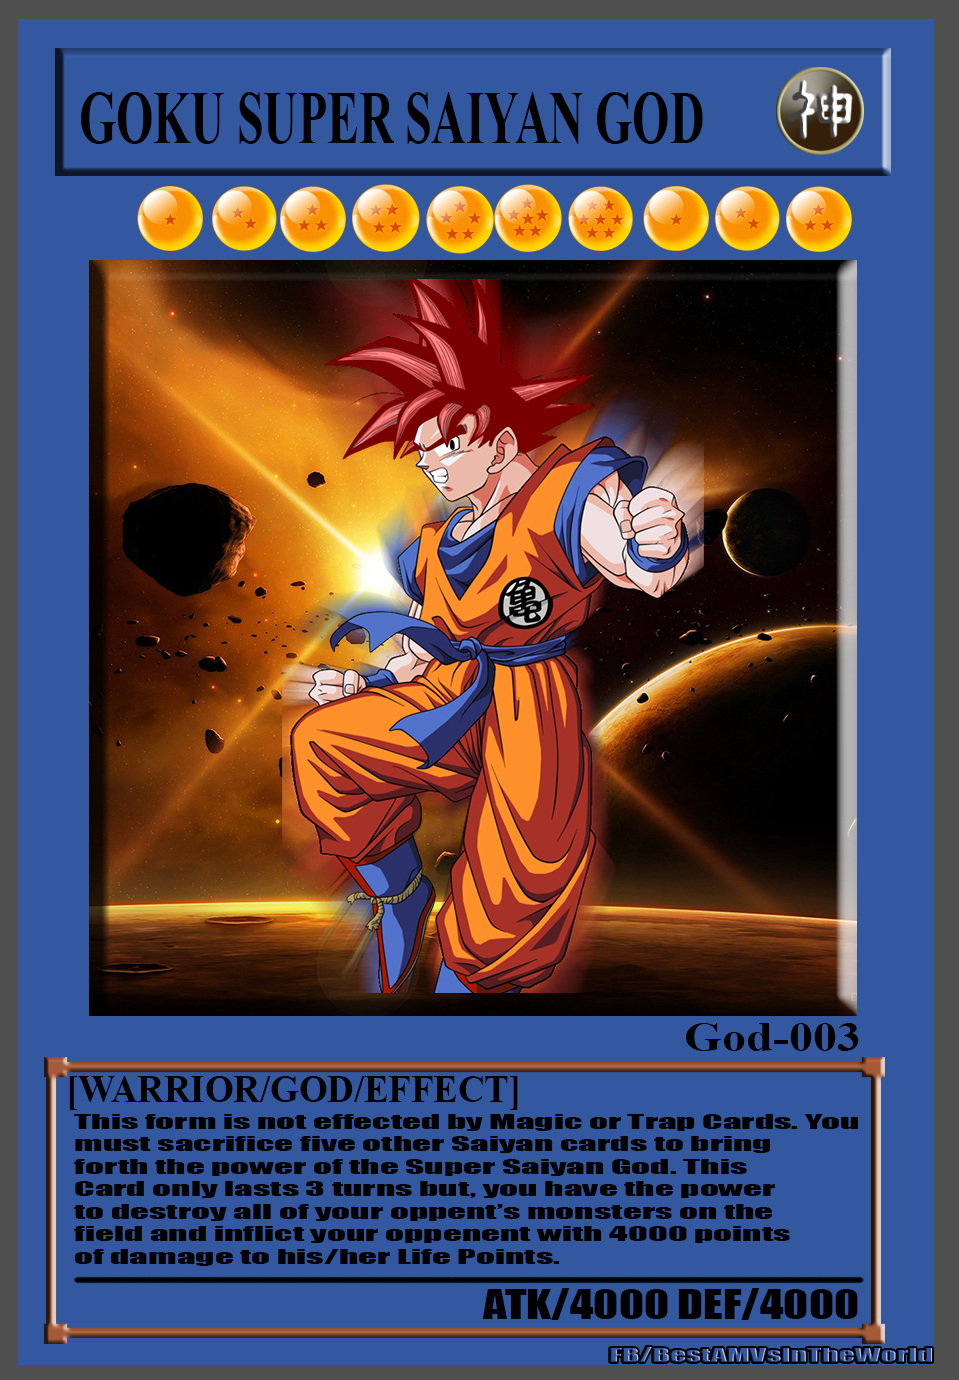 Goku Super Saiyan God Yugioh Card by dbzAfterMath on DeviantArt